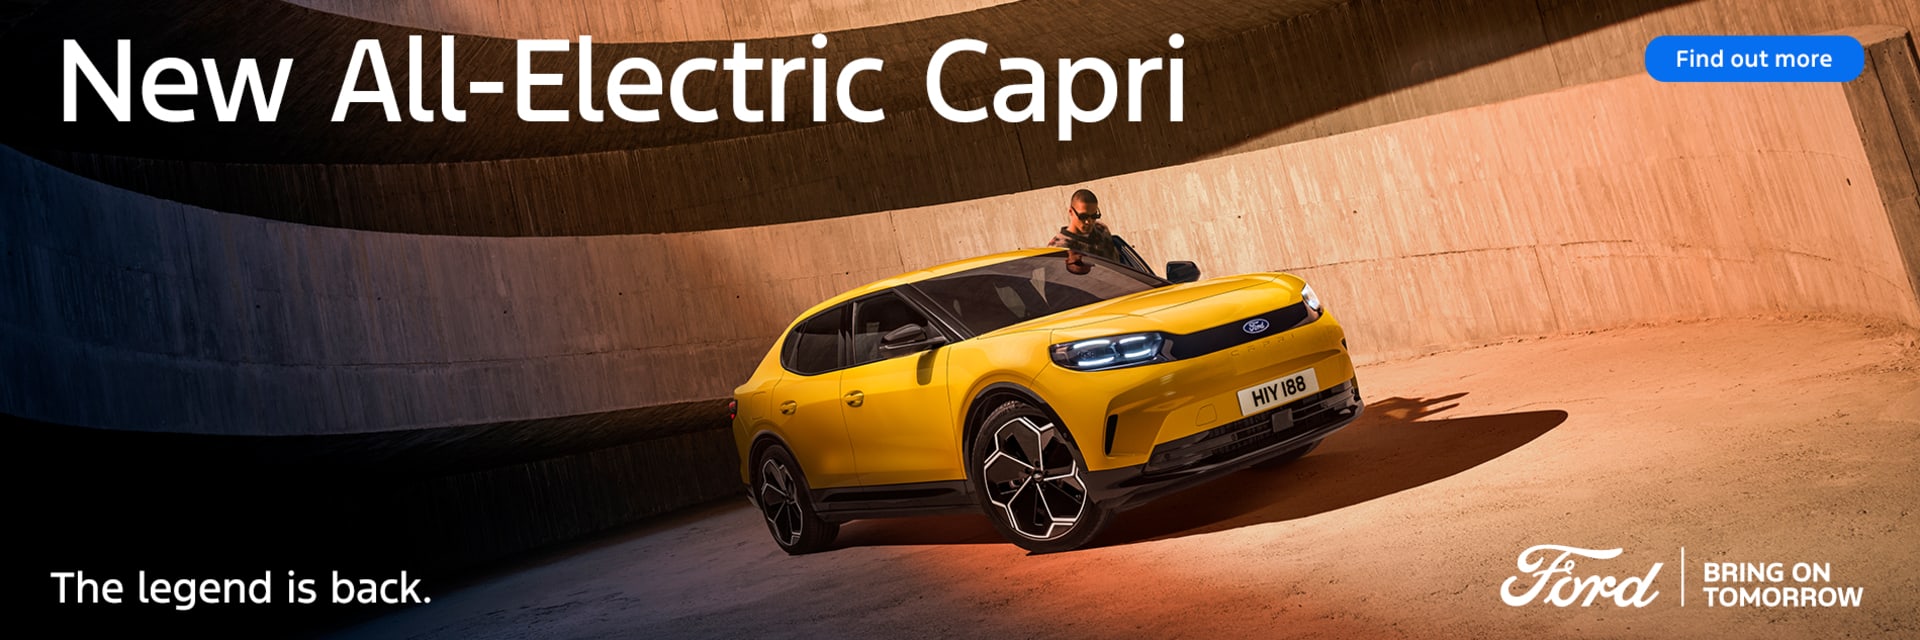 New All-Electric Ford Capri